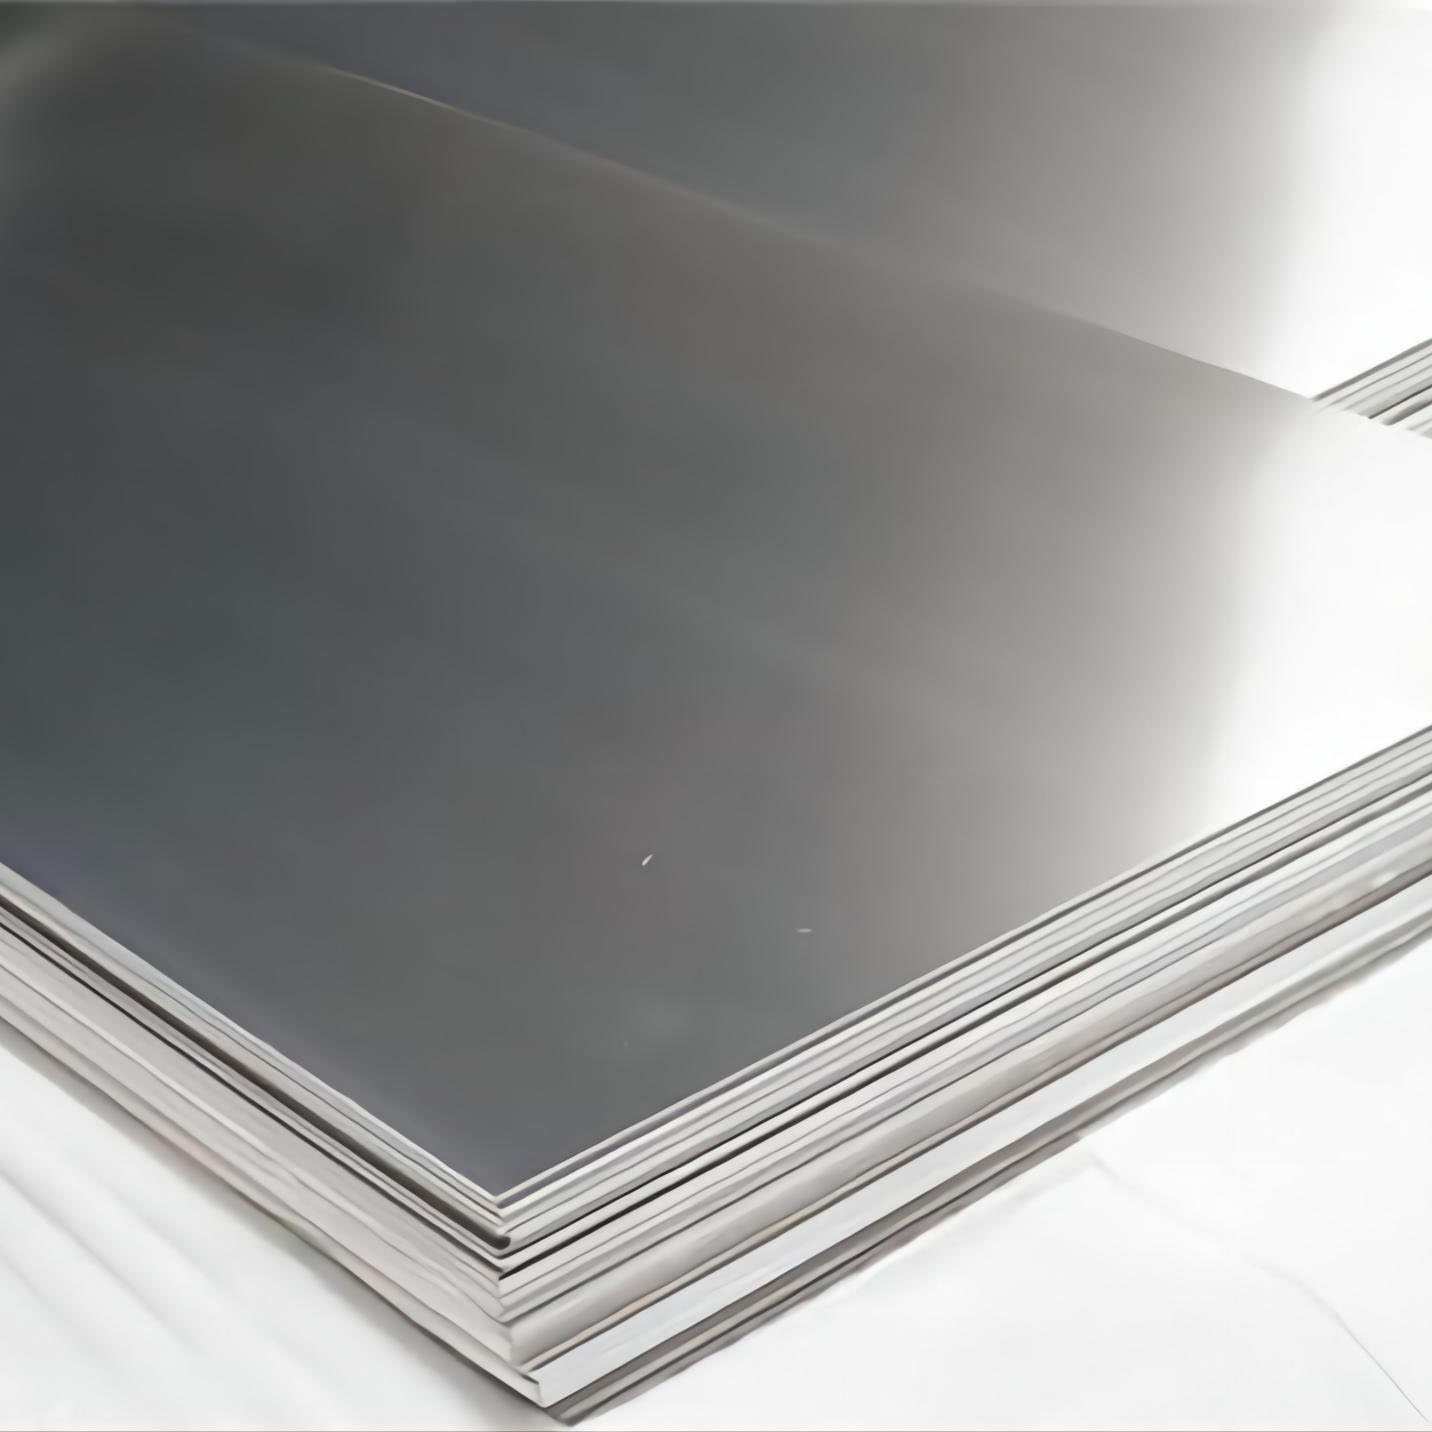 Cina Pabrik Supplier 1100 Plat Aluminium Diulas Gambar